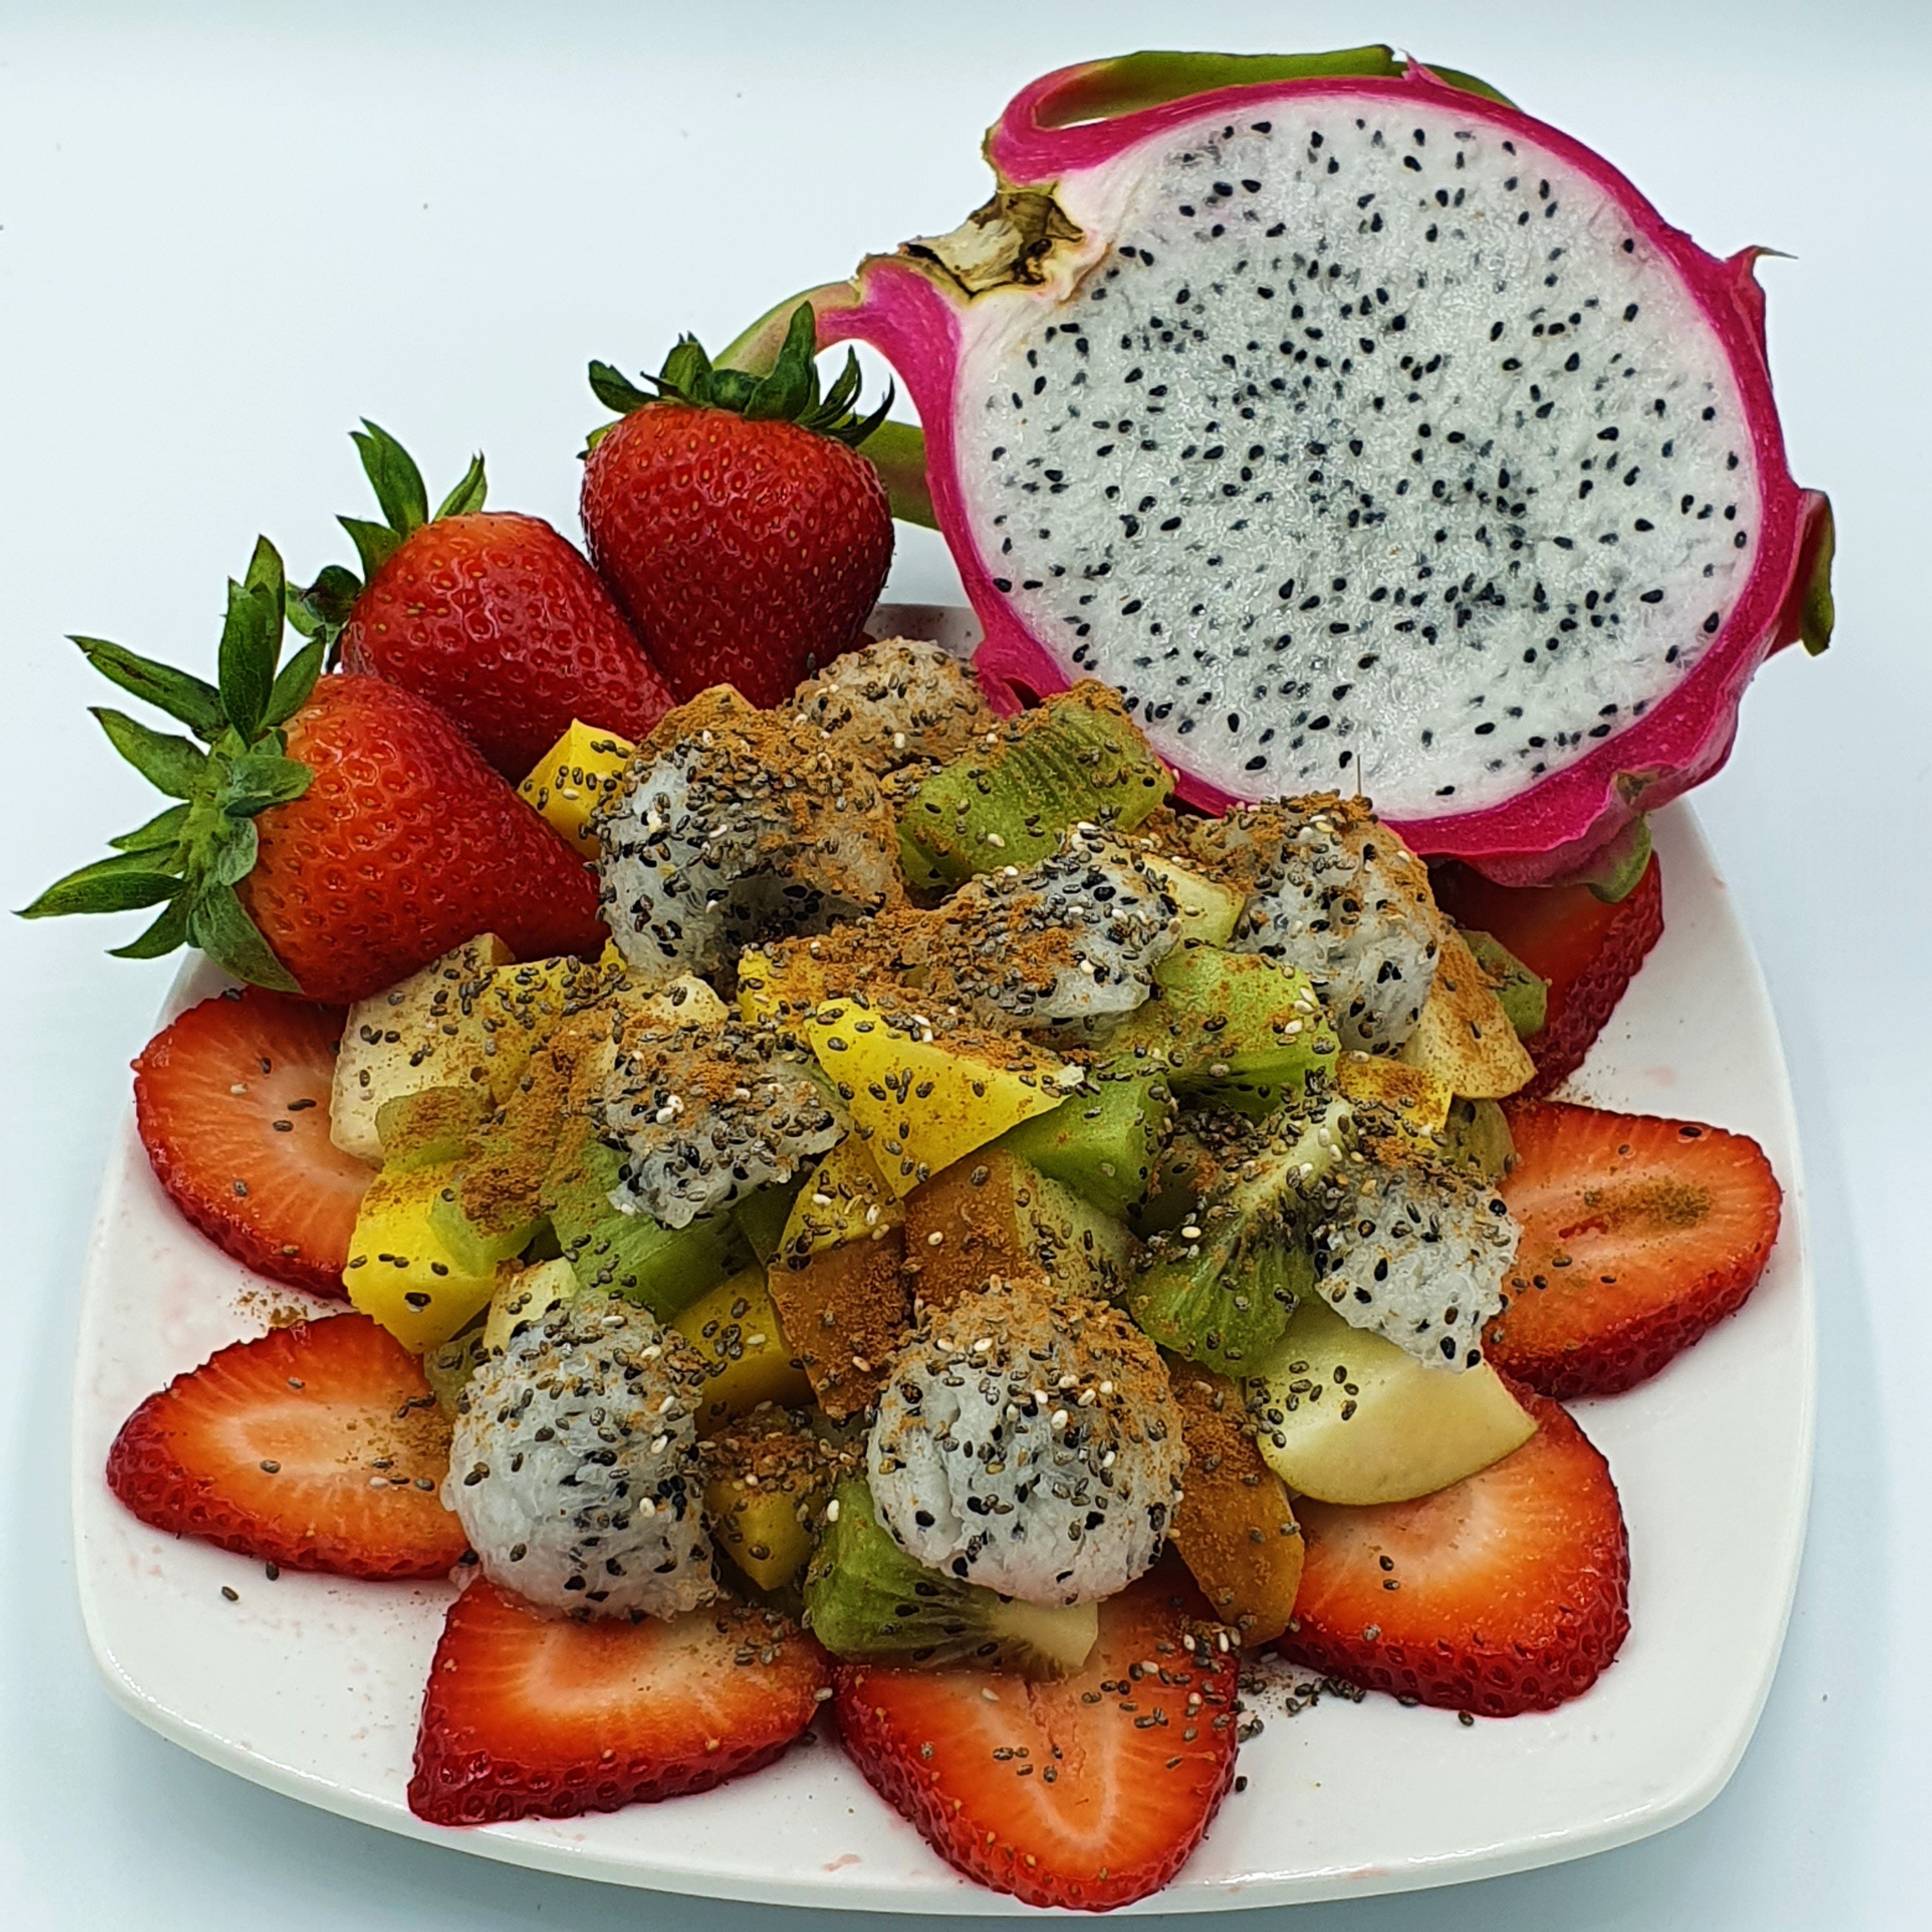 https://0201.nccdn.net/1_2/000/000/090/6bd/pitaya-fruit-salad-.jpg